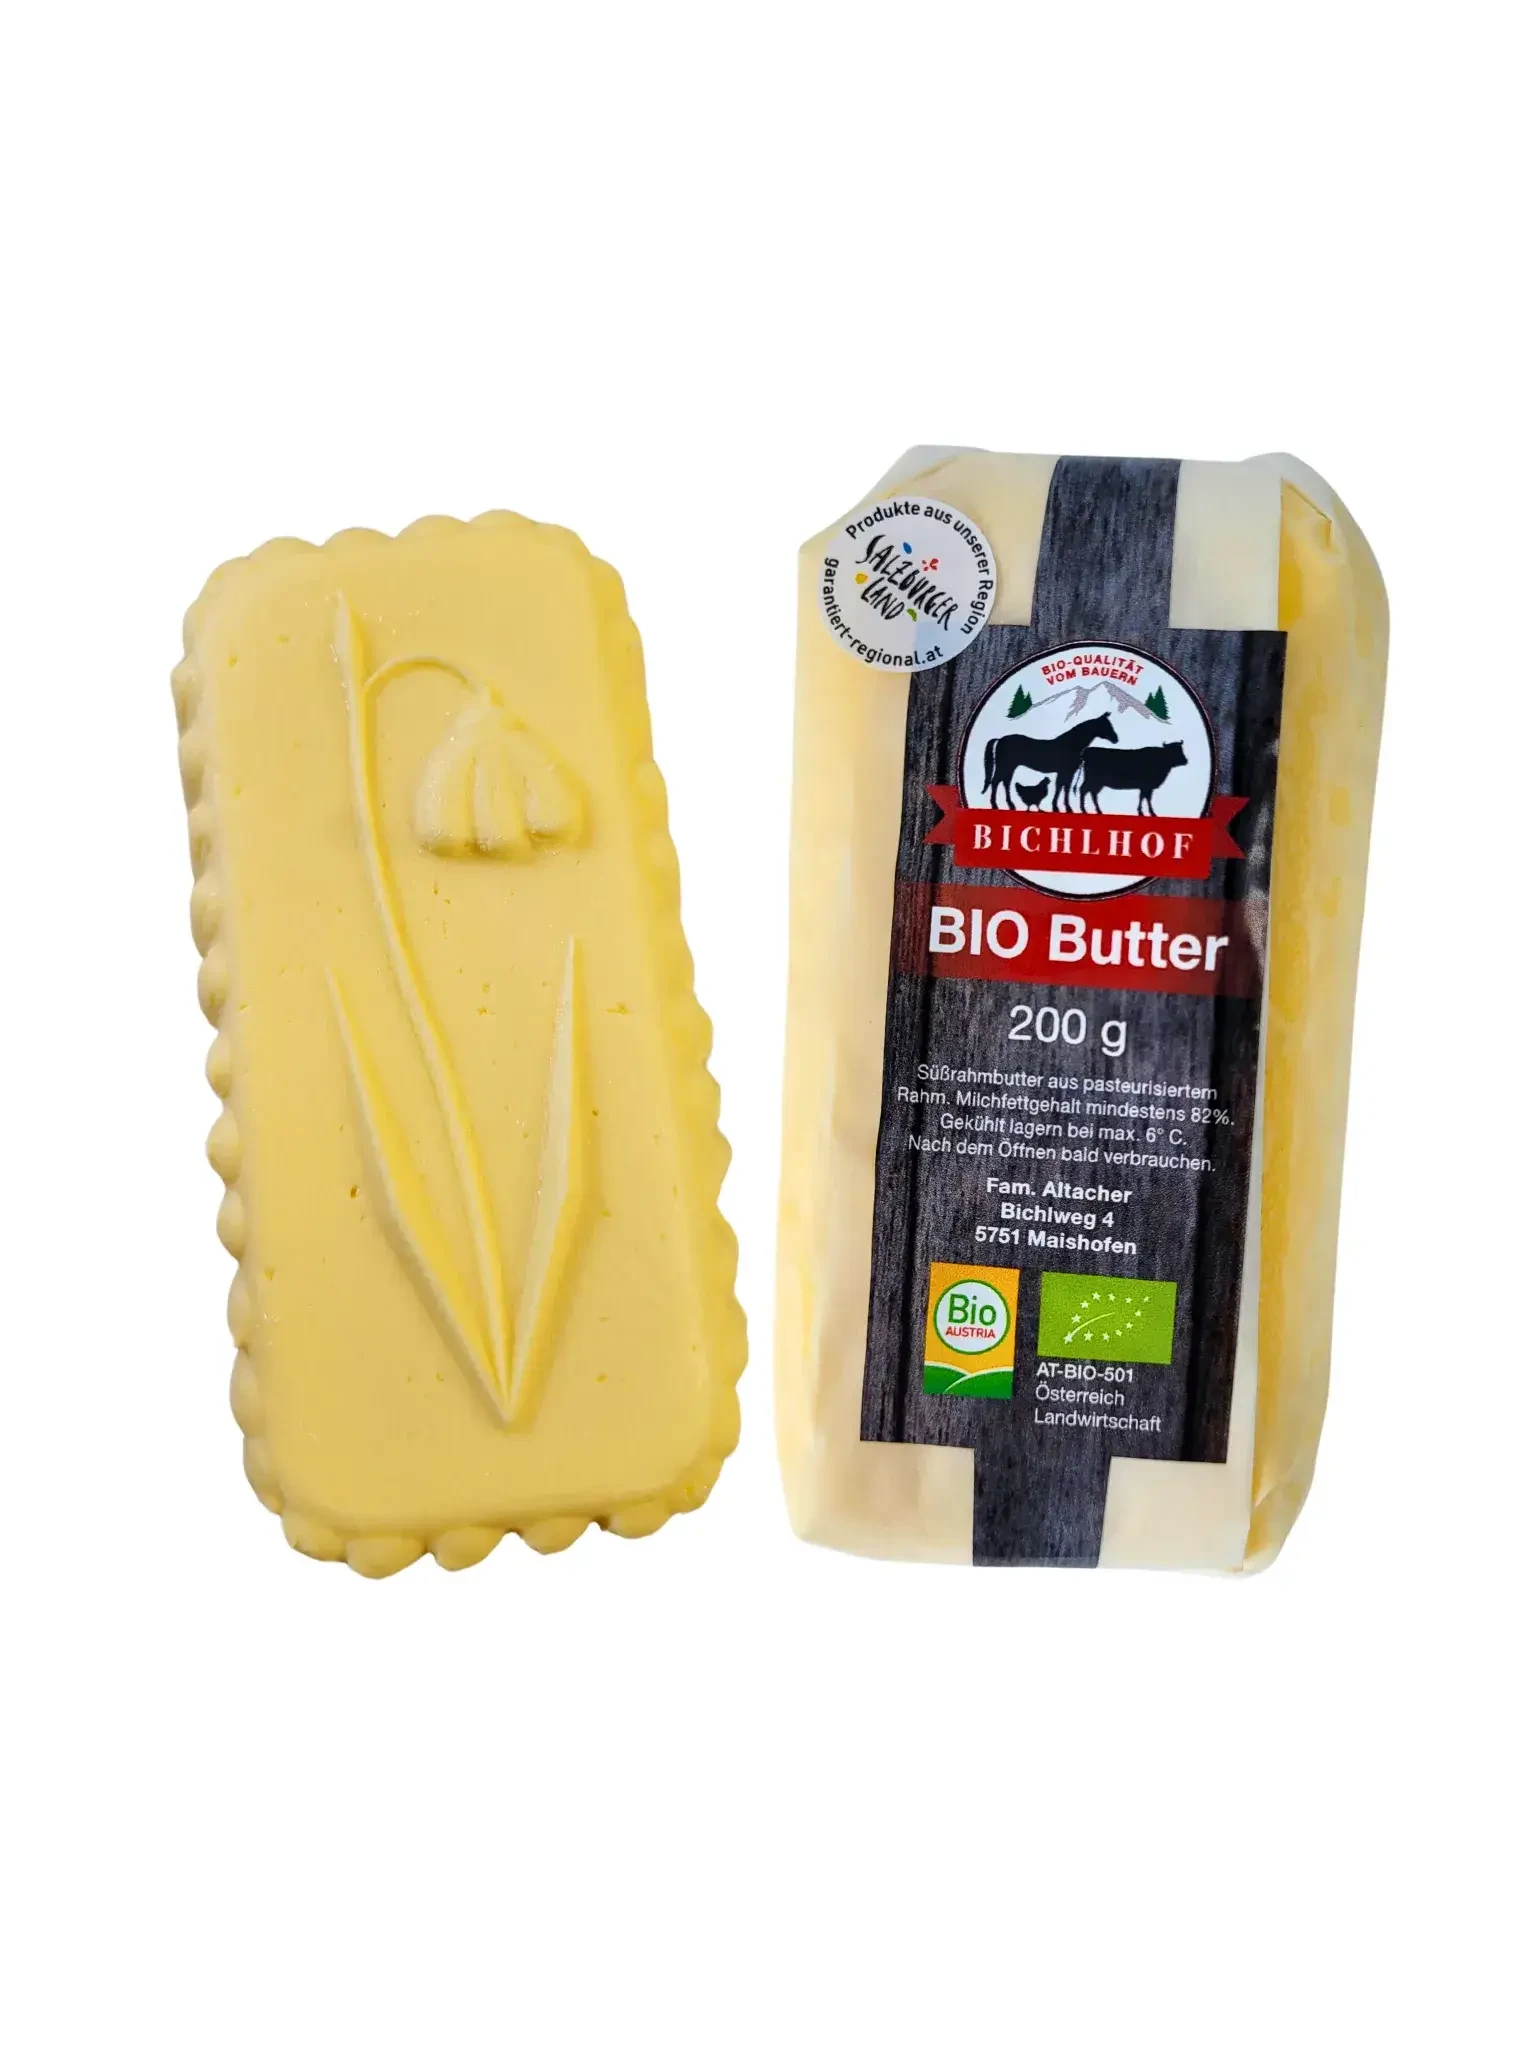 Bichlhof-Bio-Butter